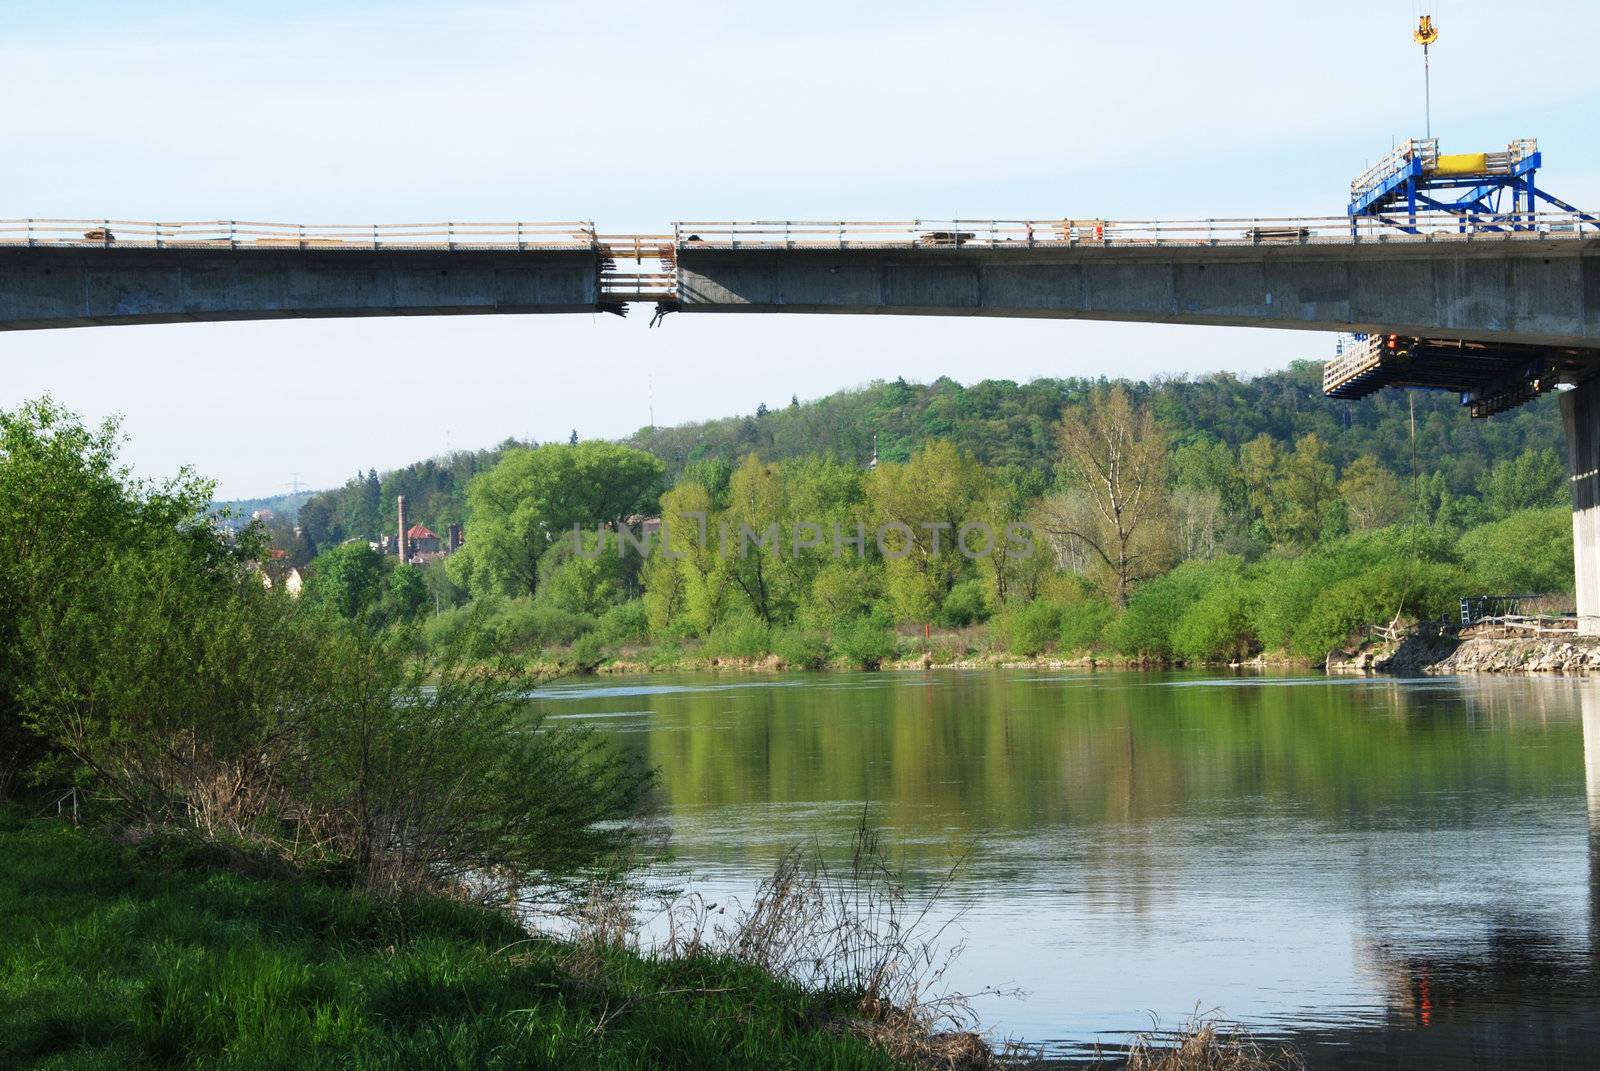 Construction of a large bridge across the river